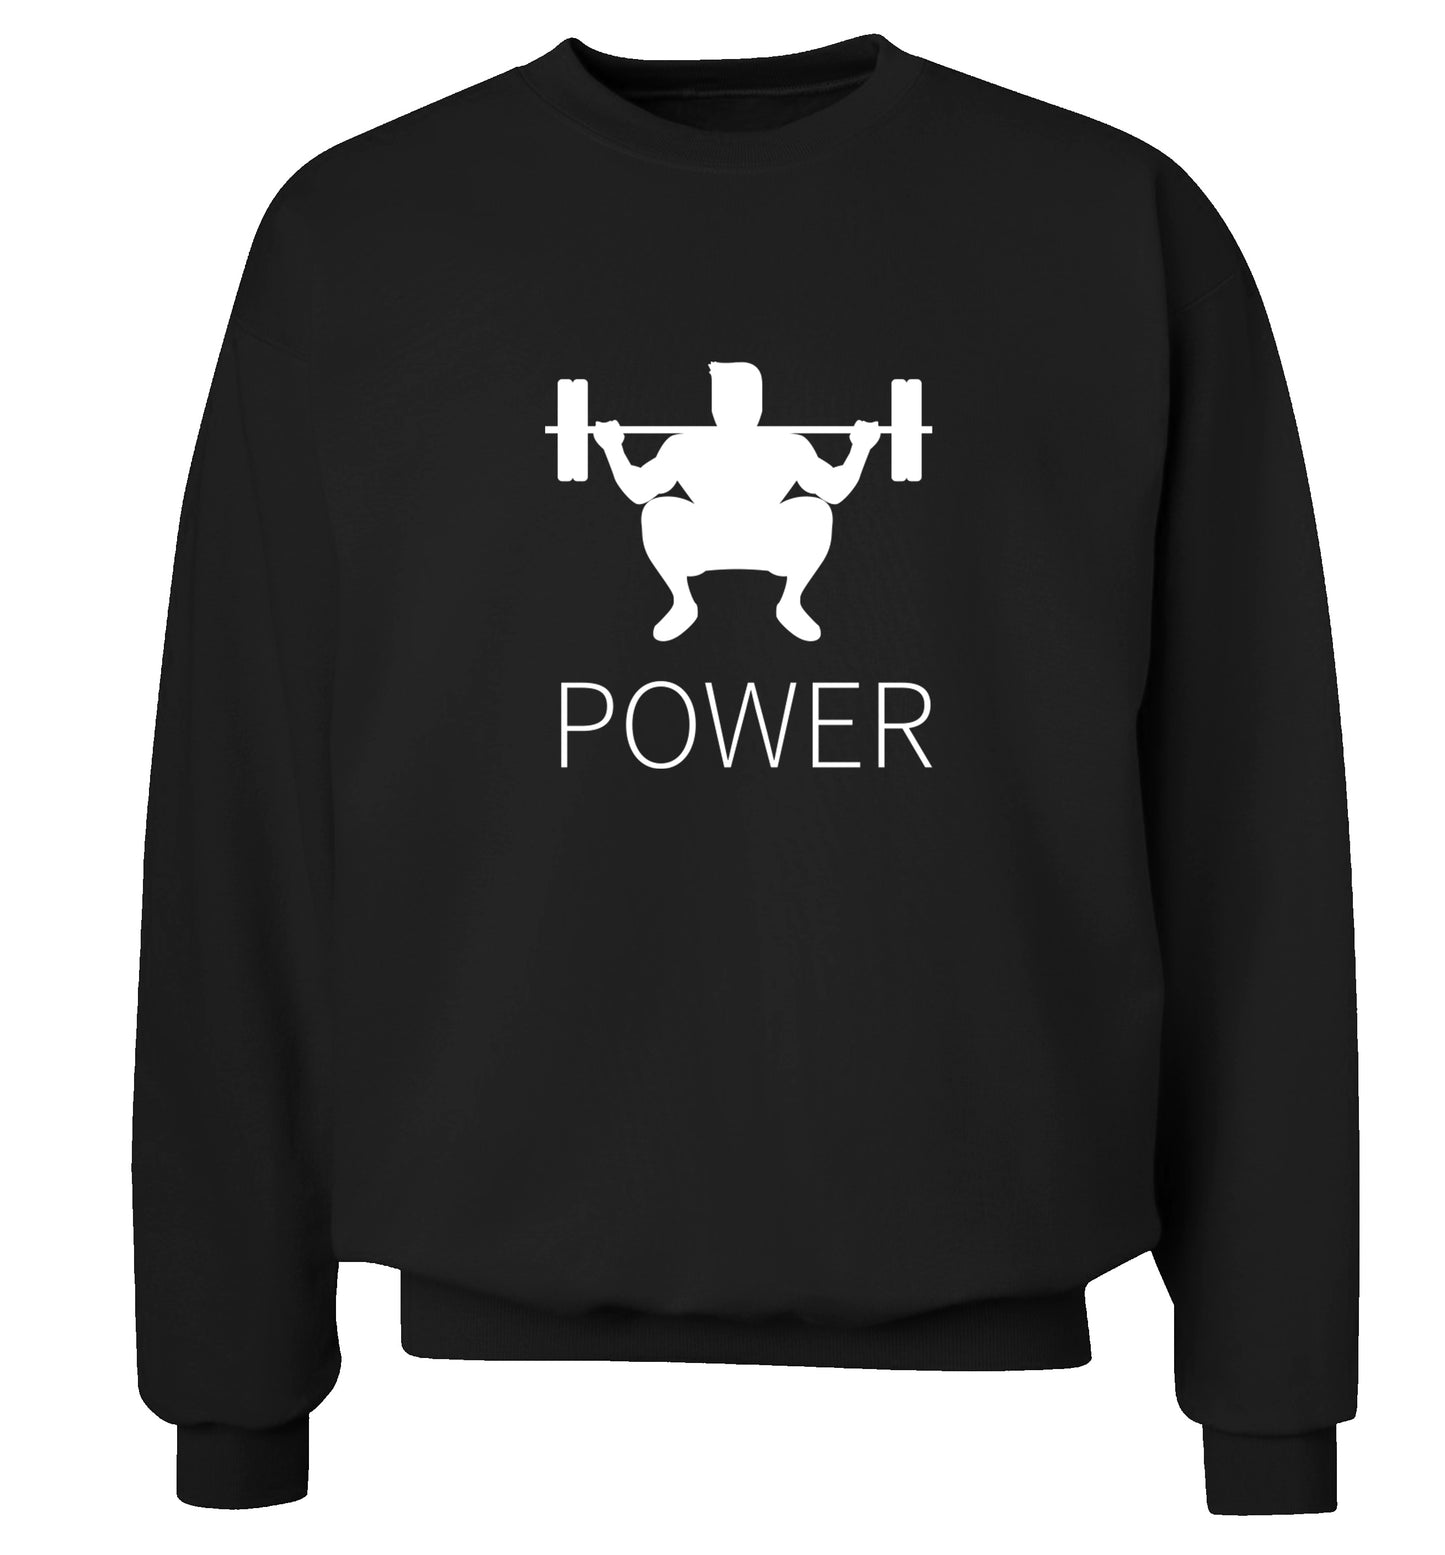 Lift power Adult's unisex black Sweater 2XL